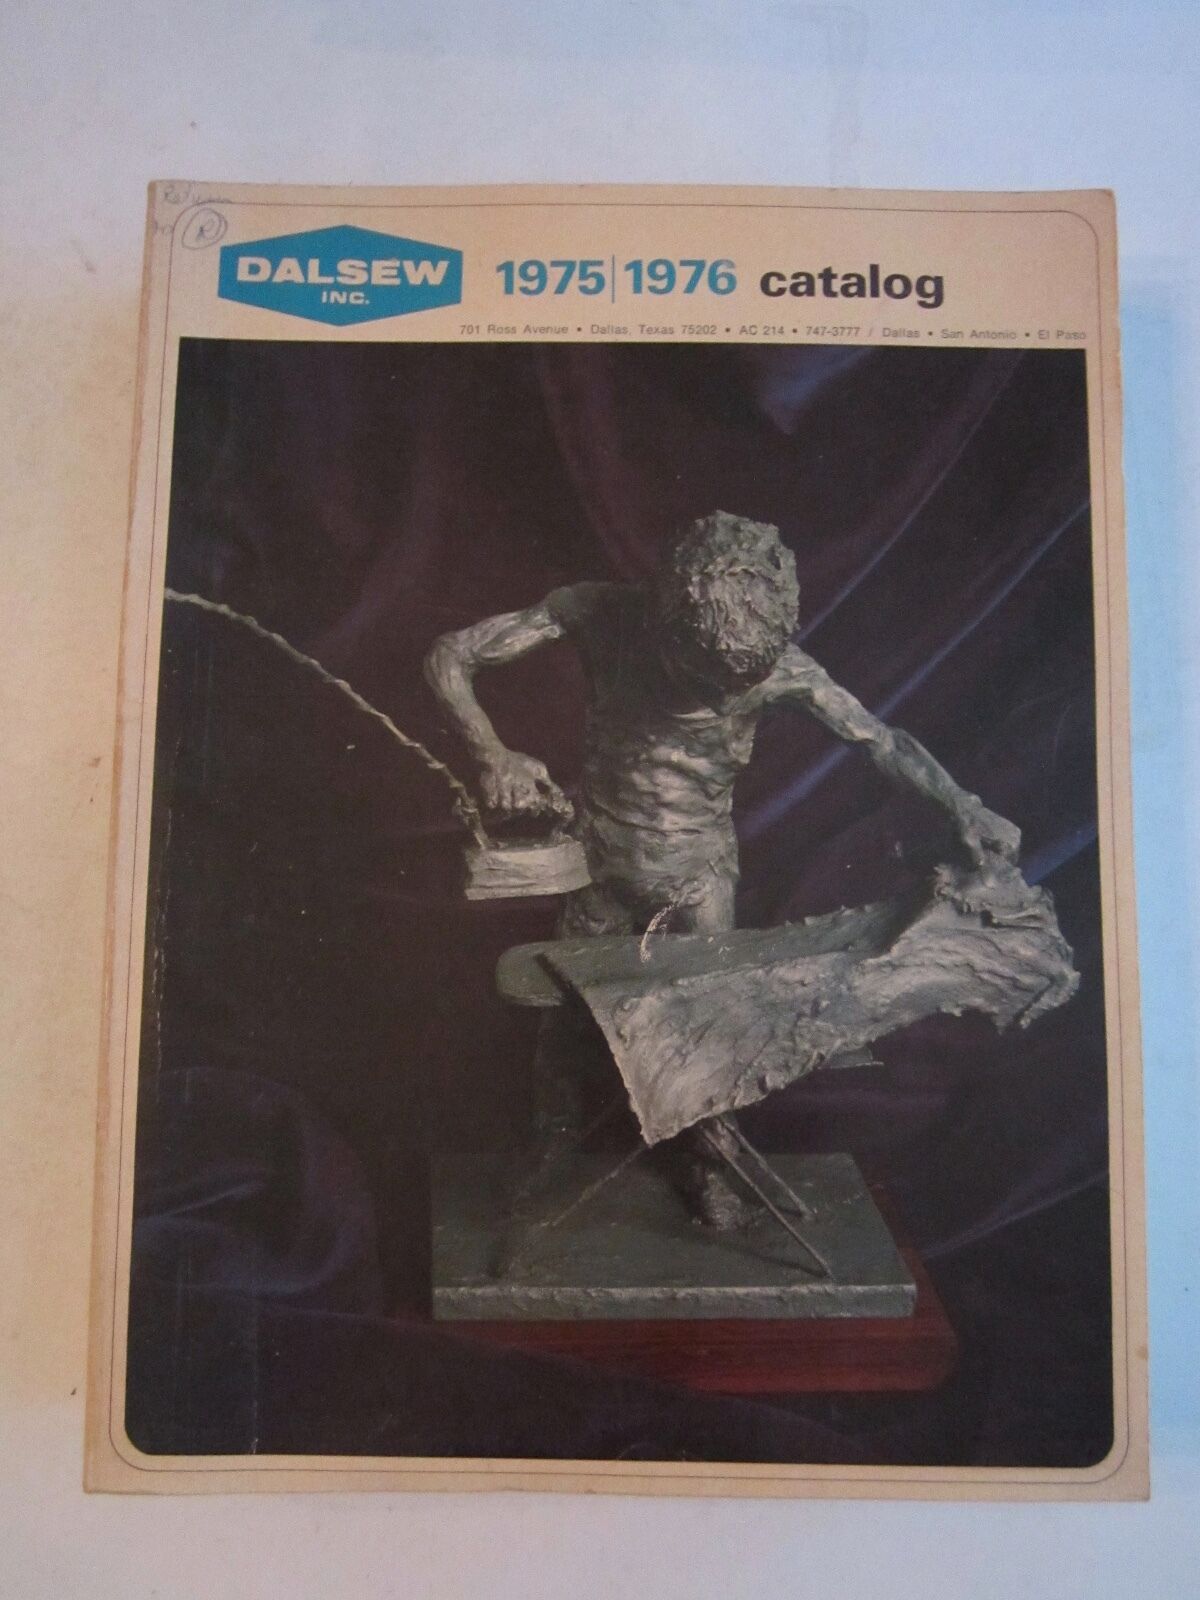 1975-1976 DALLAS SEWING MACHINE PARTS CATALOG - 1016 PAGES - SEE PICS - TUB RRRR